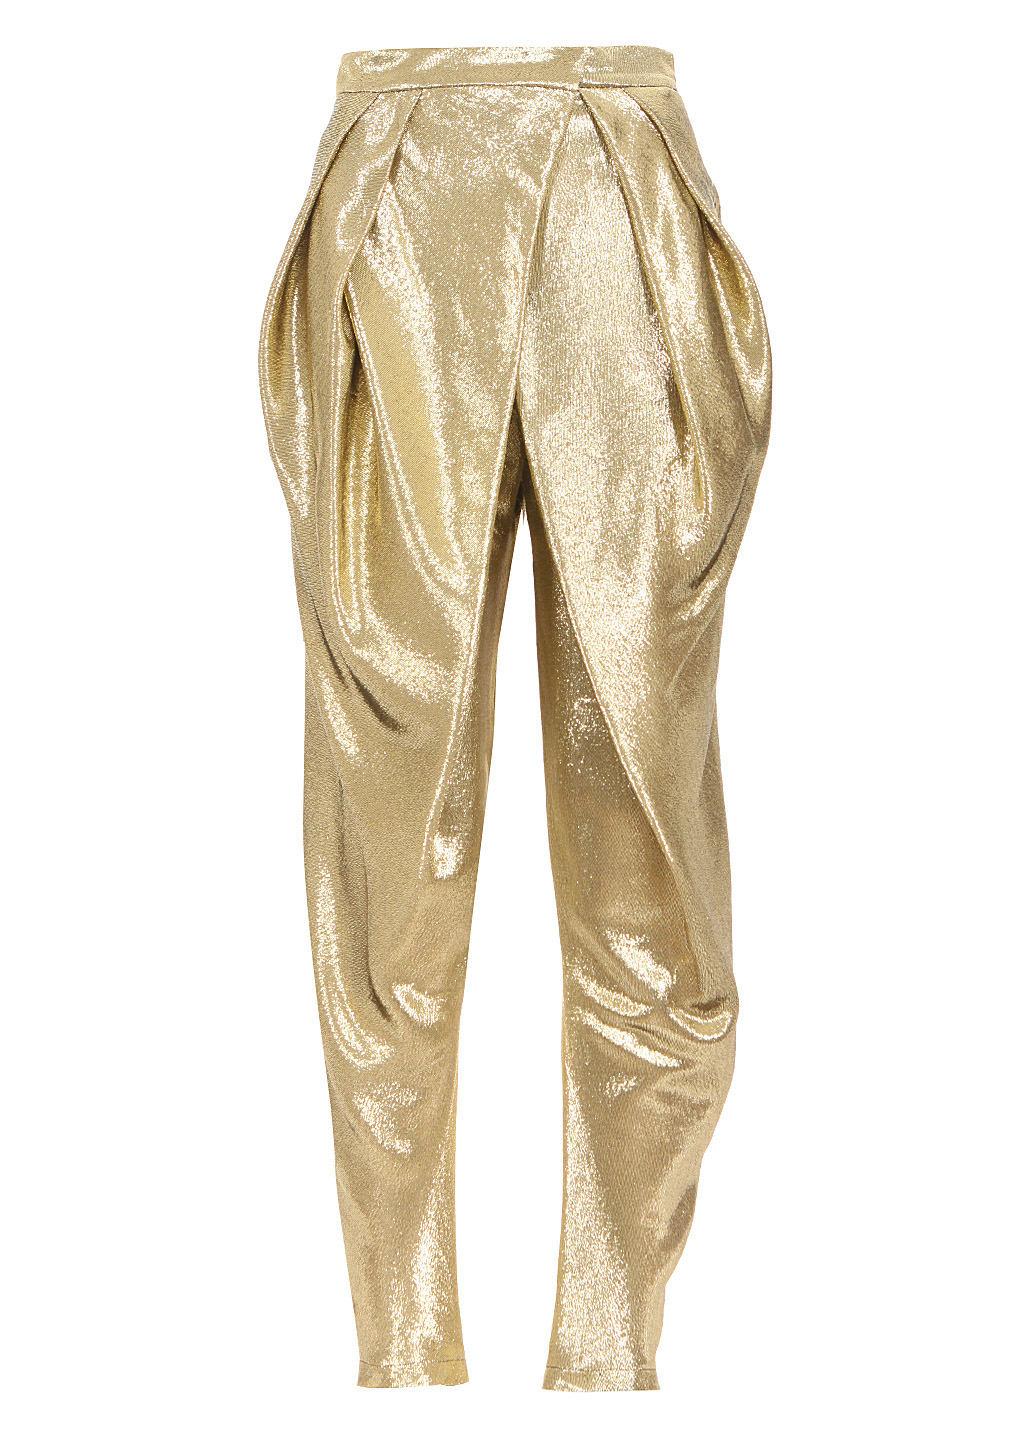 Balmain Goldtone Lamé Silk Pants in Gold | Lyst